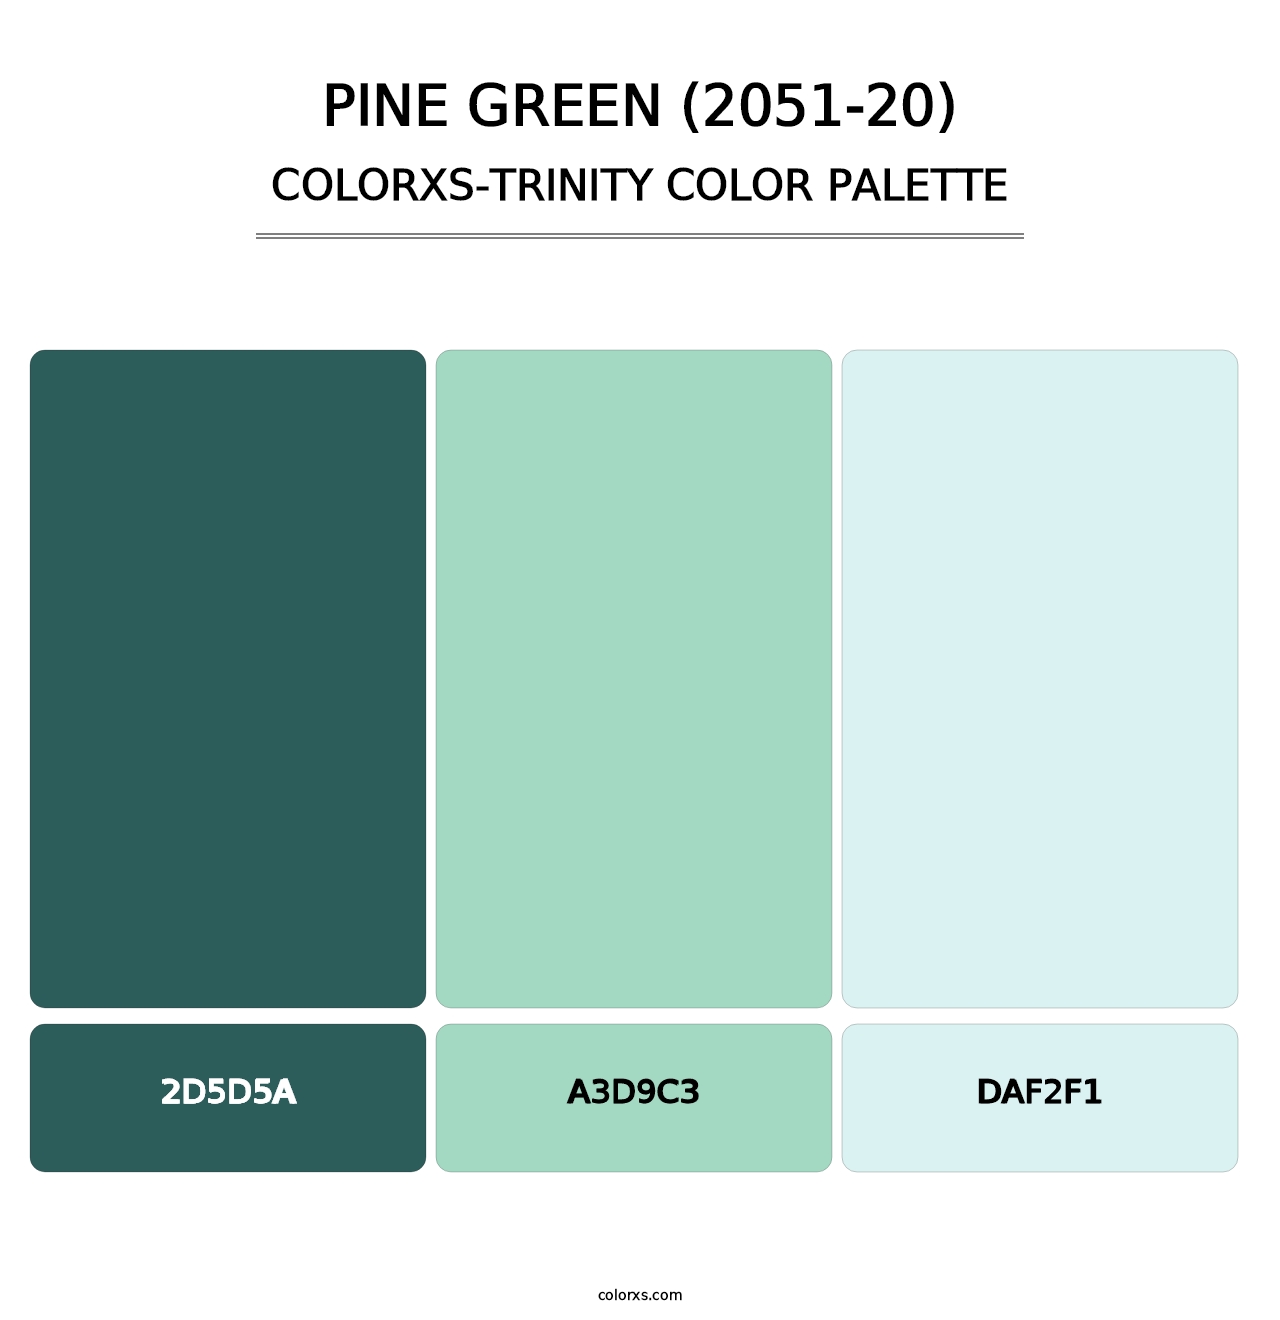 Pine Green (2051-20) - Colorxs Trinity Palette